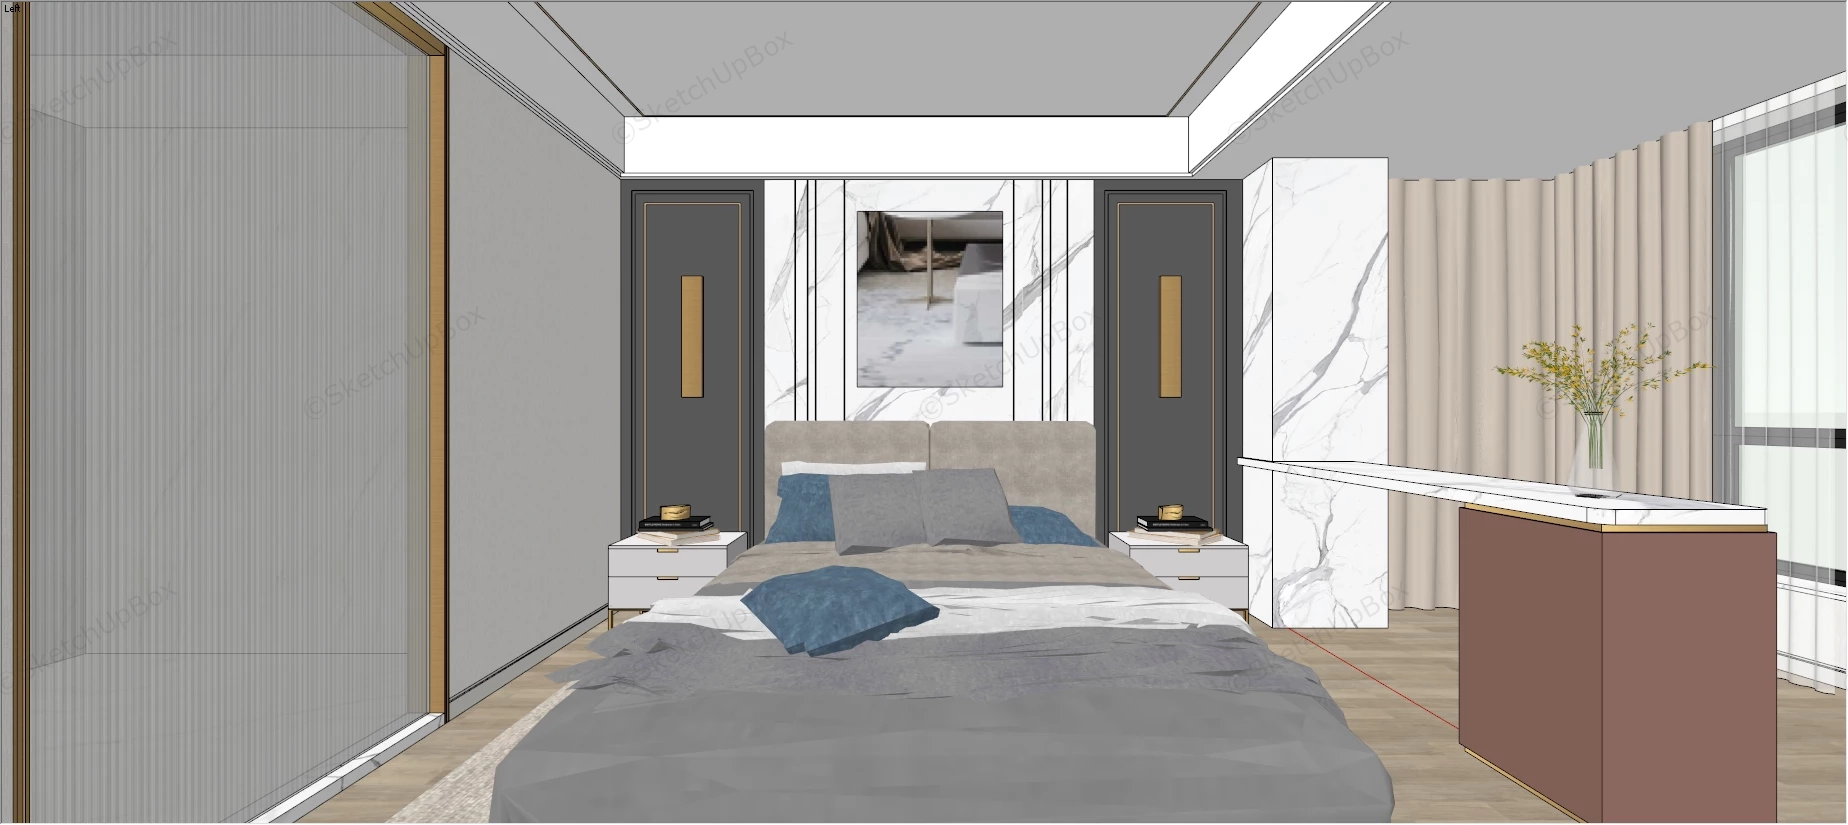 2 Bedroom Apartment Interior Design sketchup model preview - SketchupBox